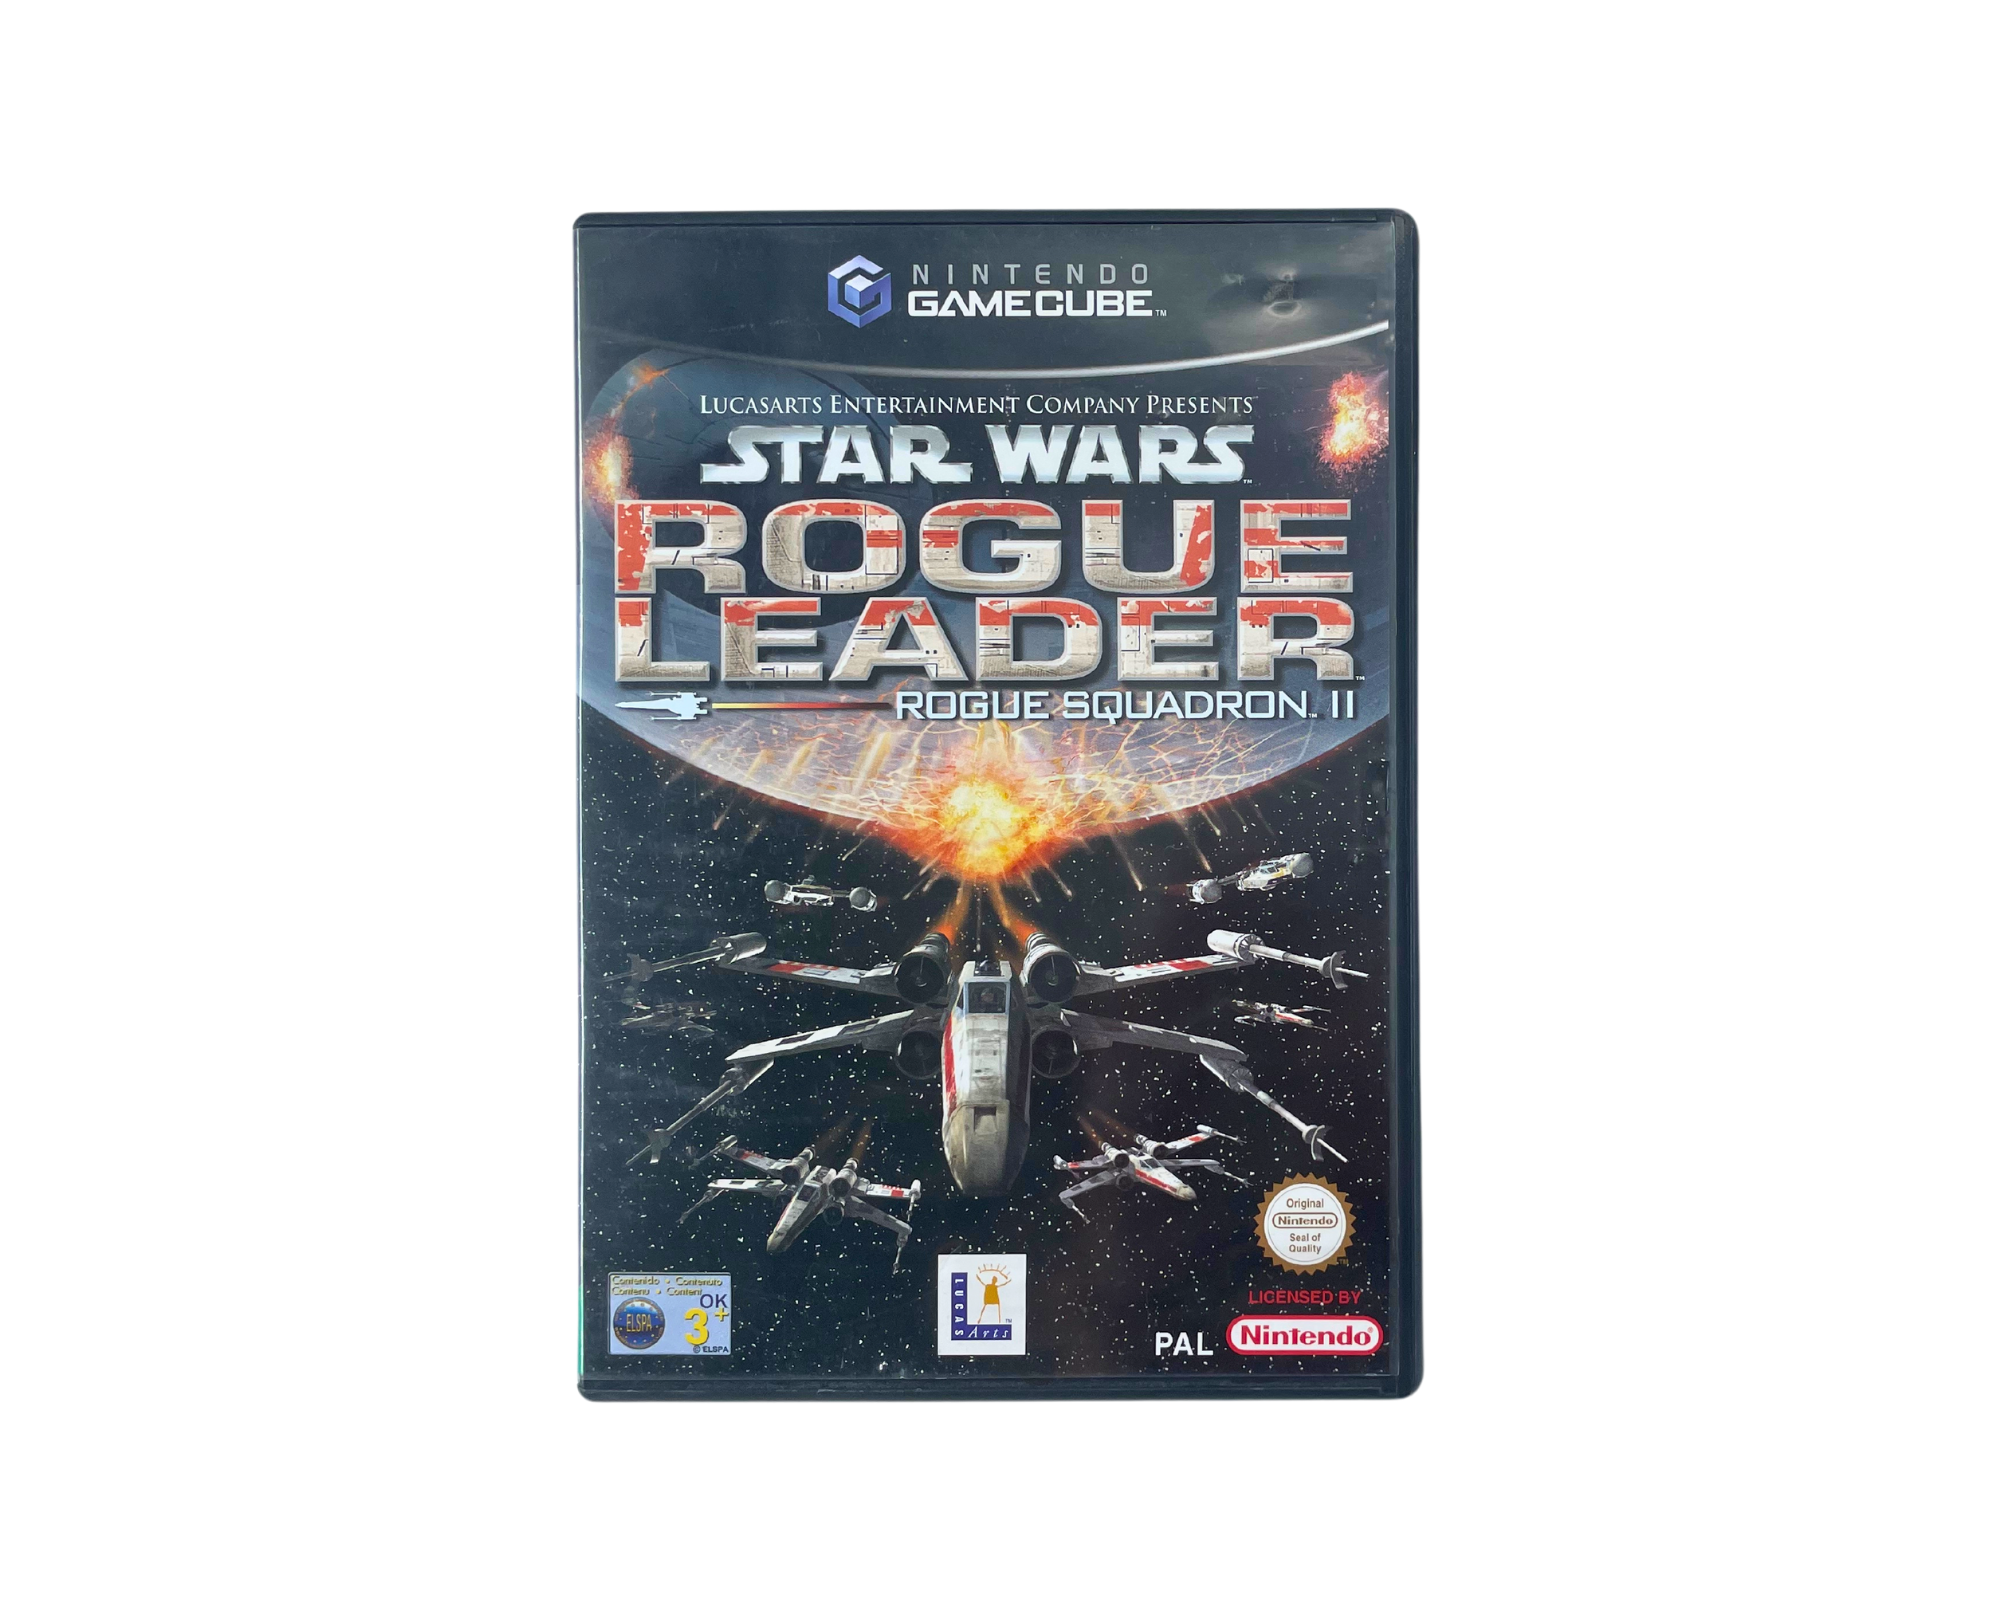 Star Wars: Rogue Leader